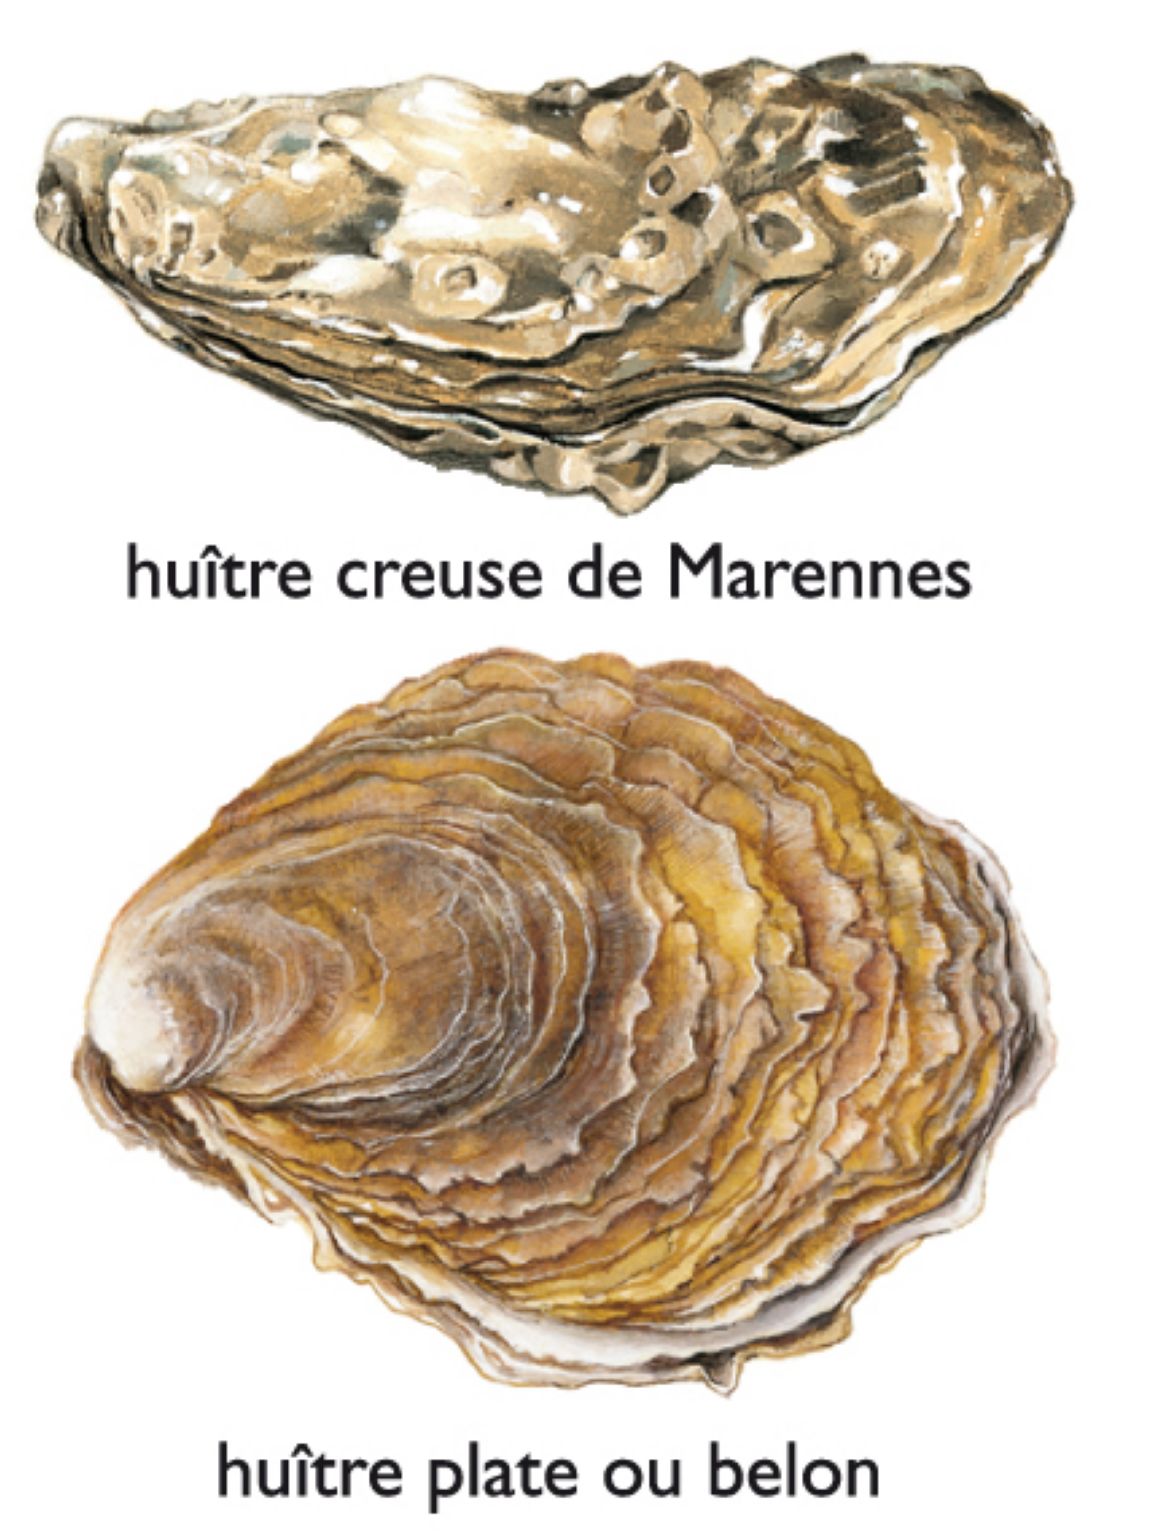 deux types d’huîtres